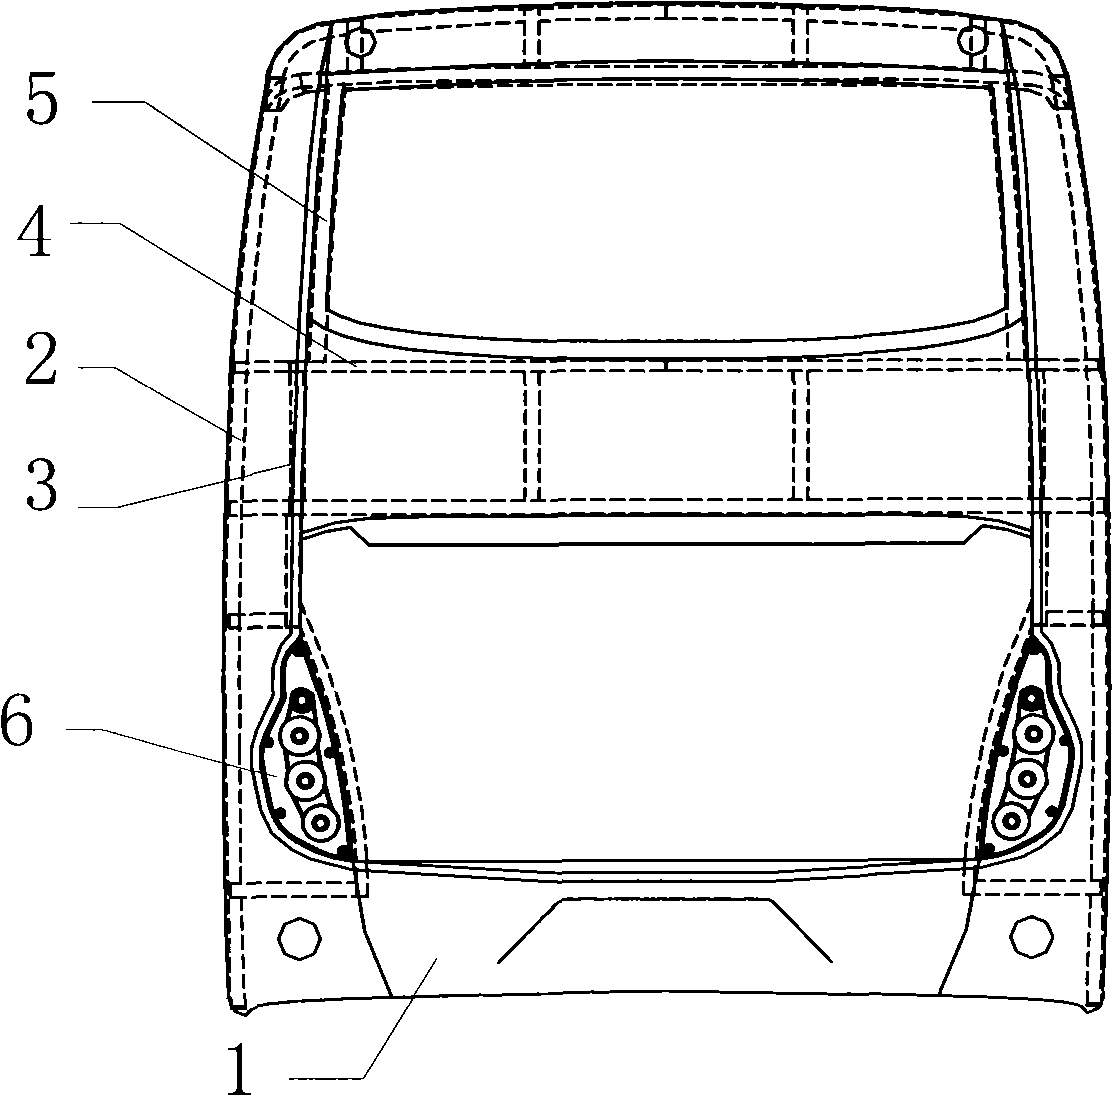 Streamline passenger vehicle tail plate